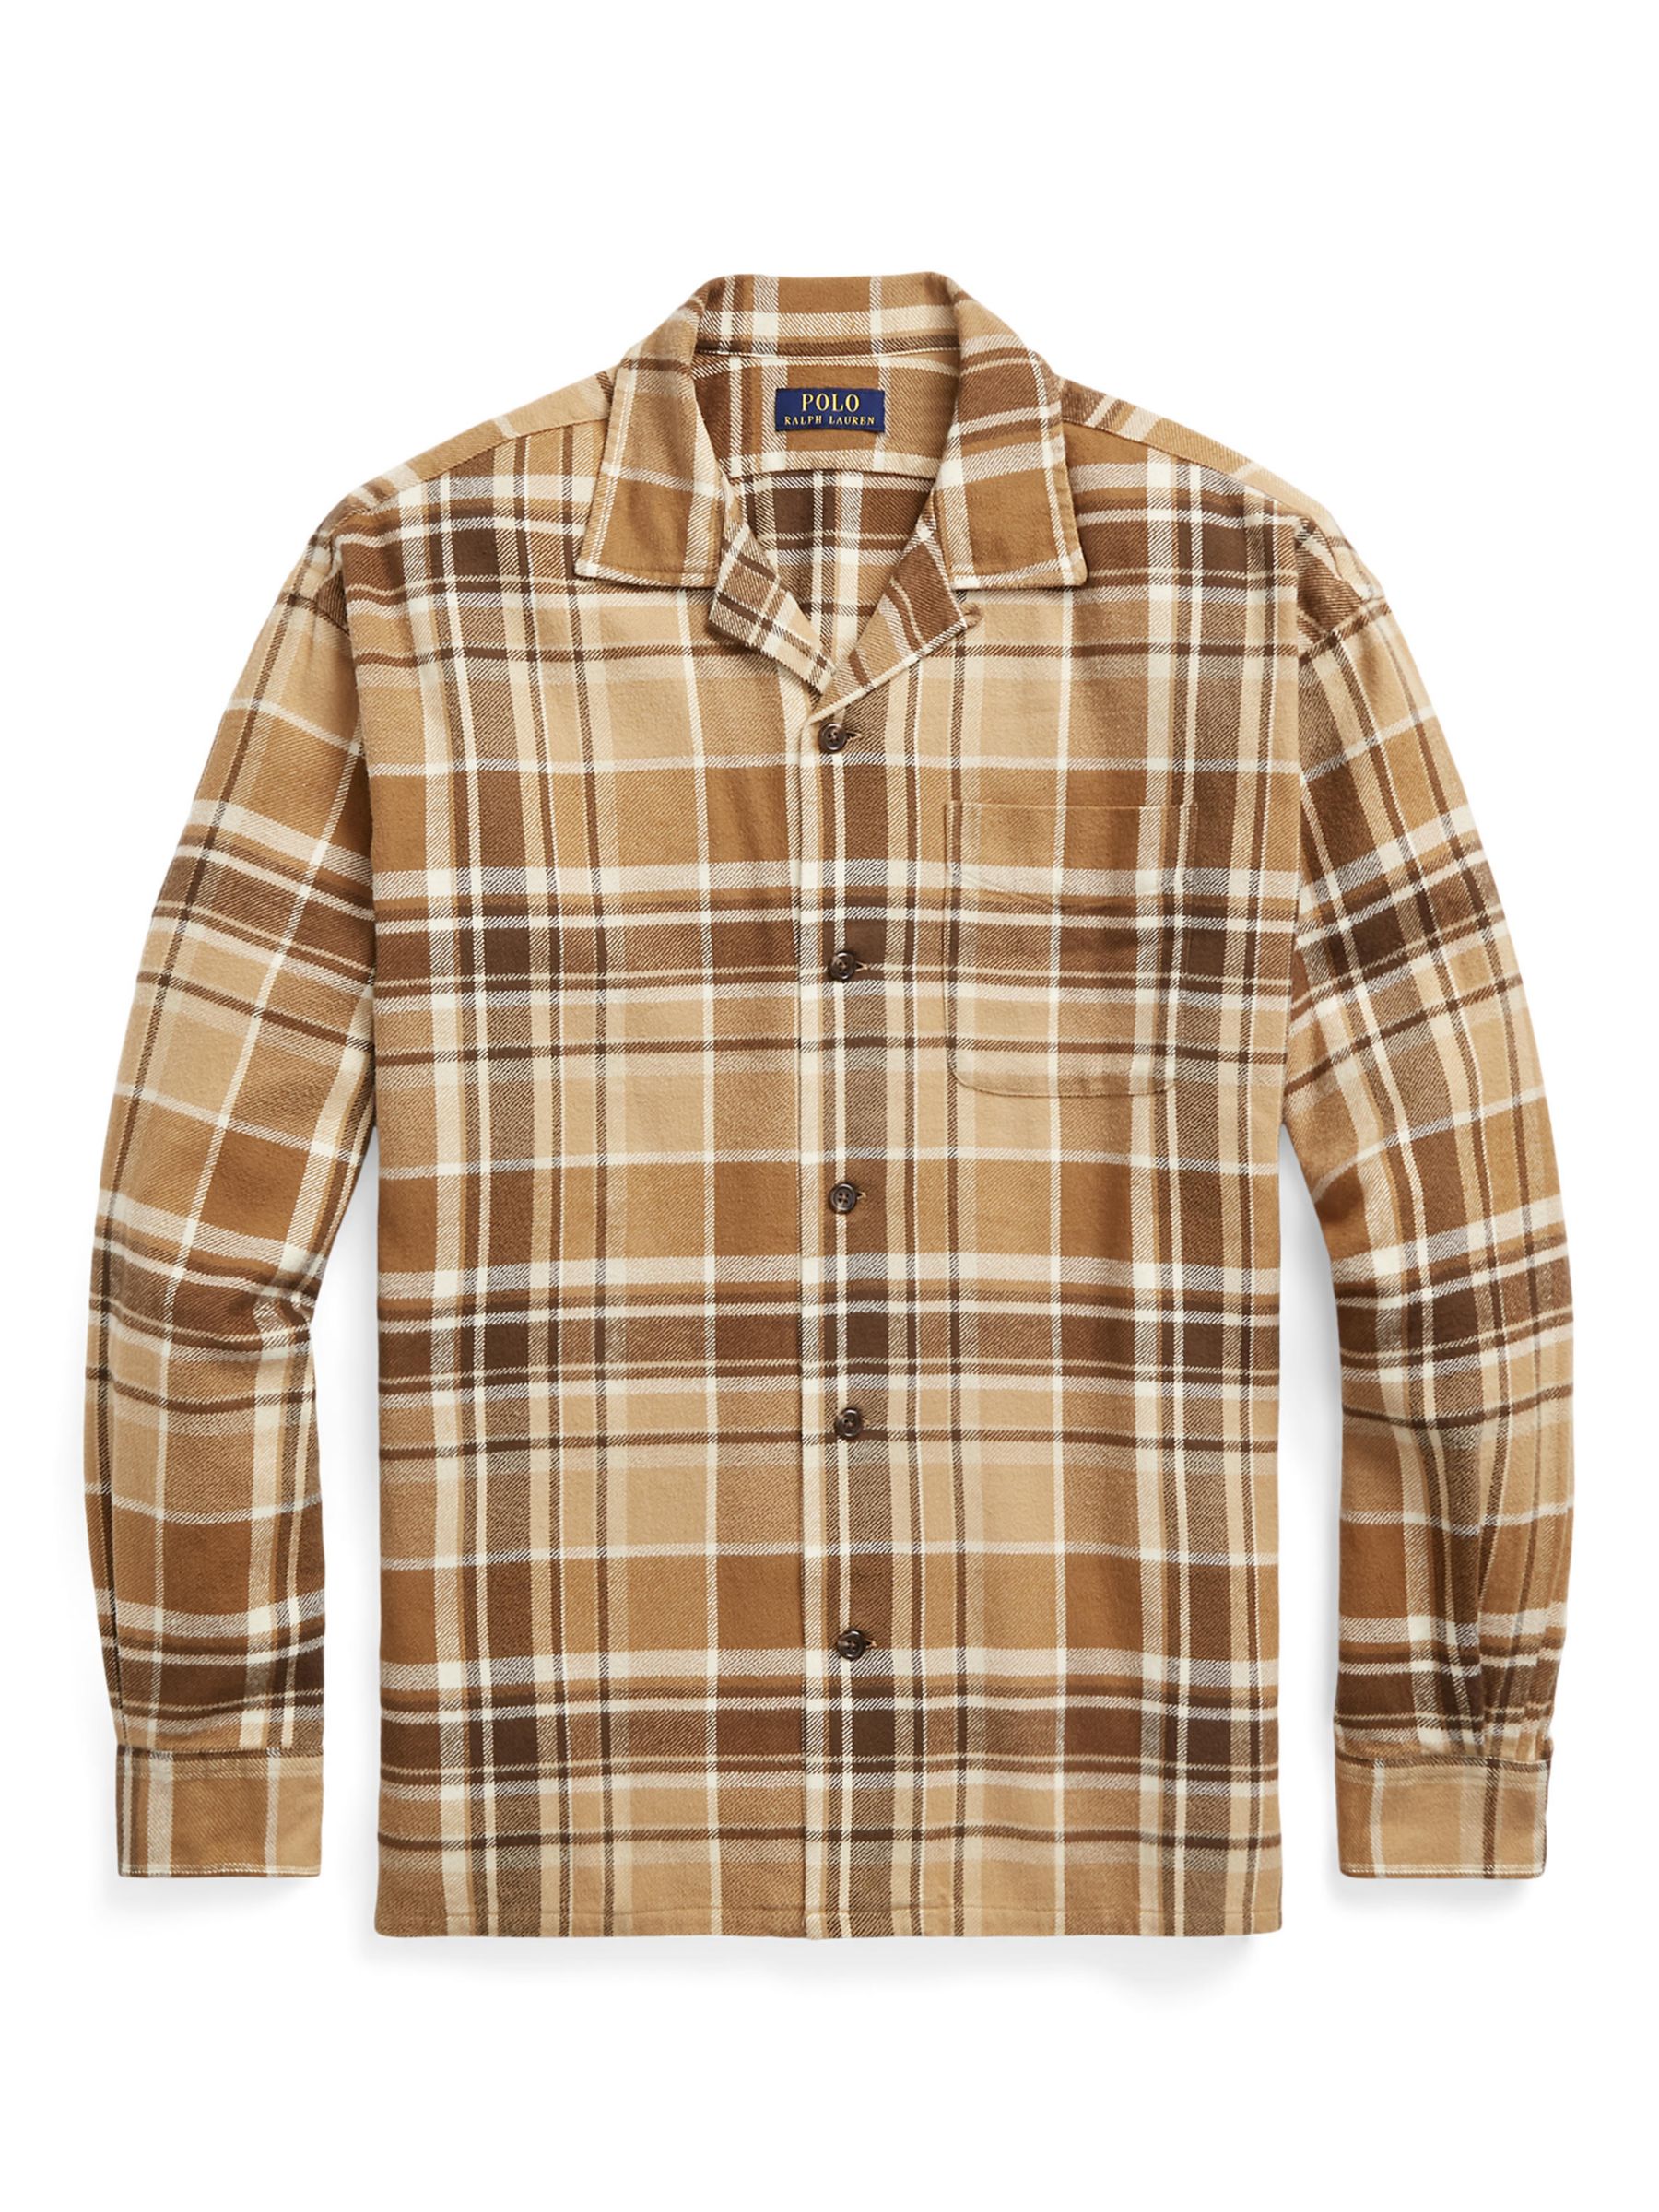 Polo Ralph Lauren Long Sleeve Plaid Camp Shirt, Brown/Multi